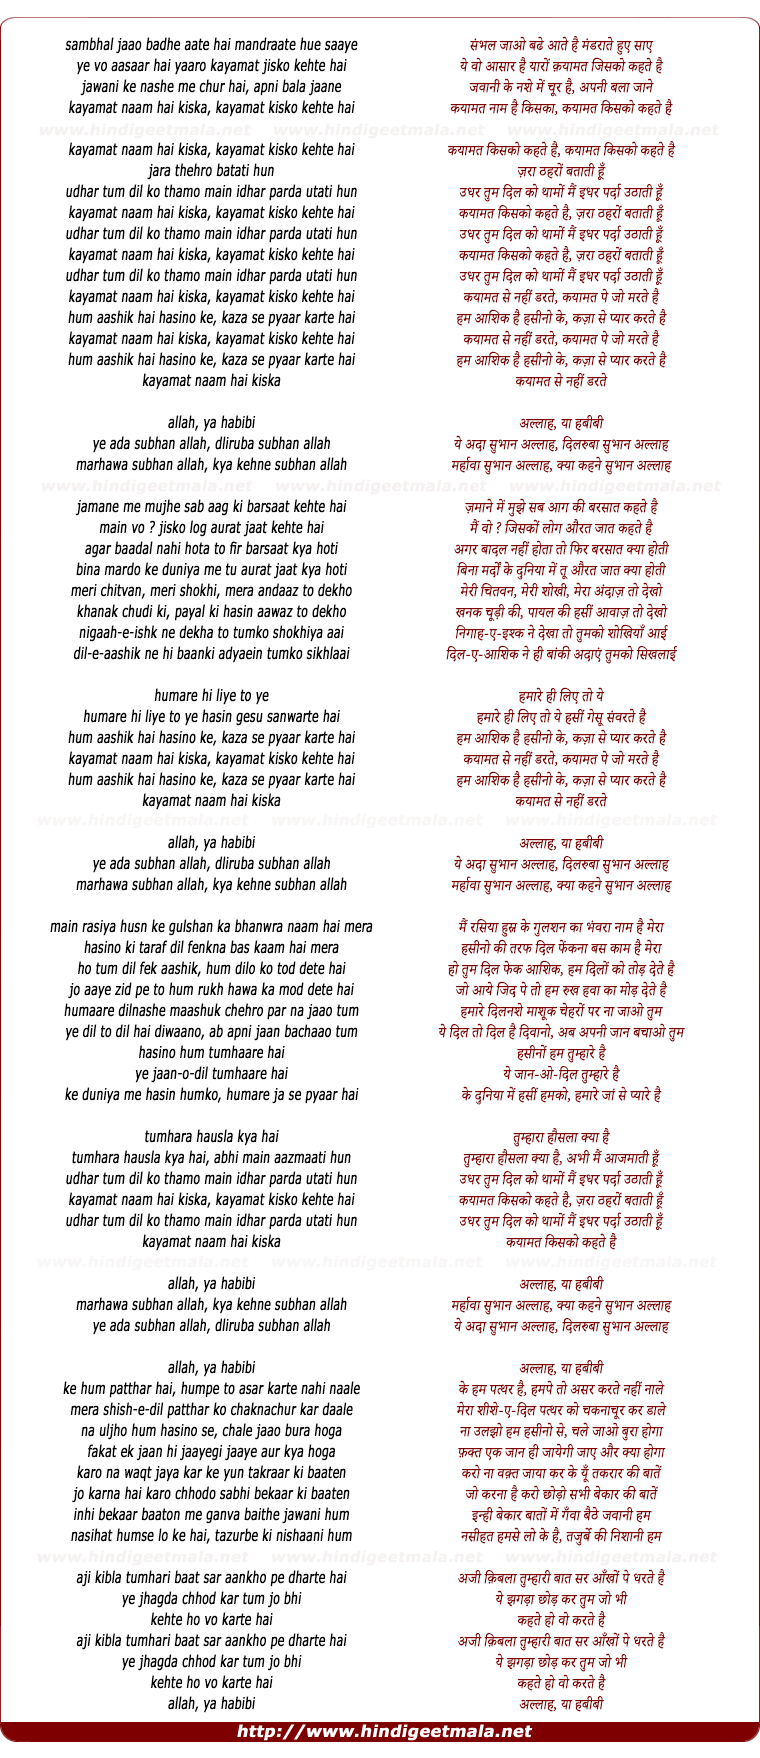 lyrics of song Qayamat Naam Hai Kiska